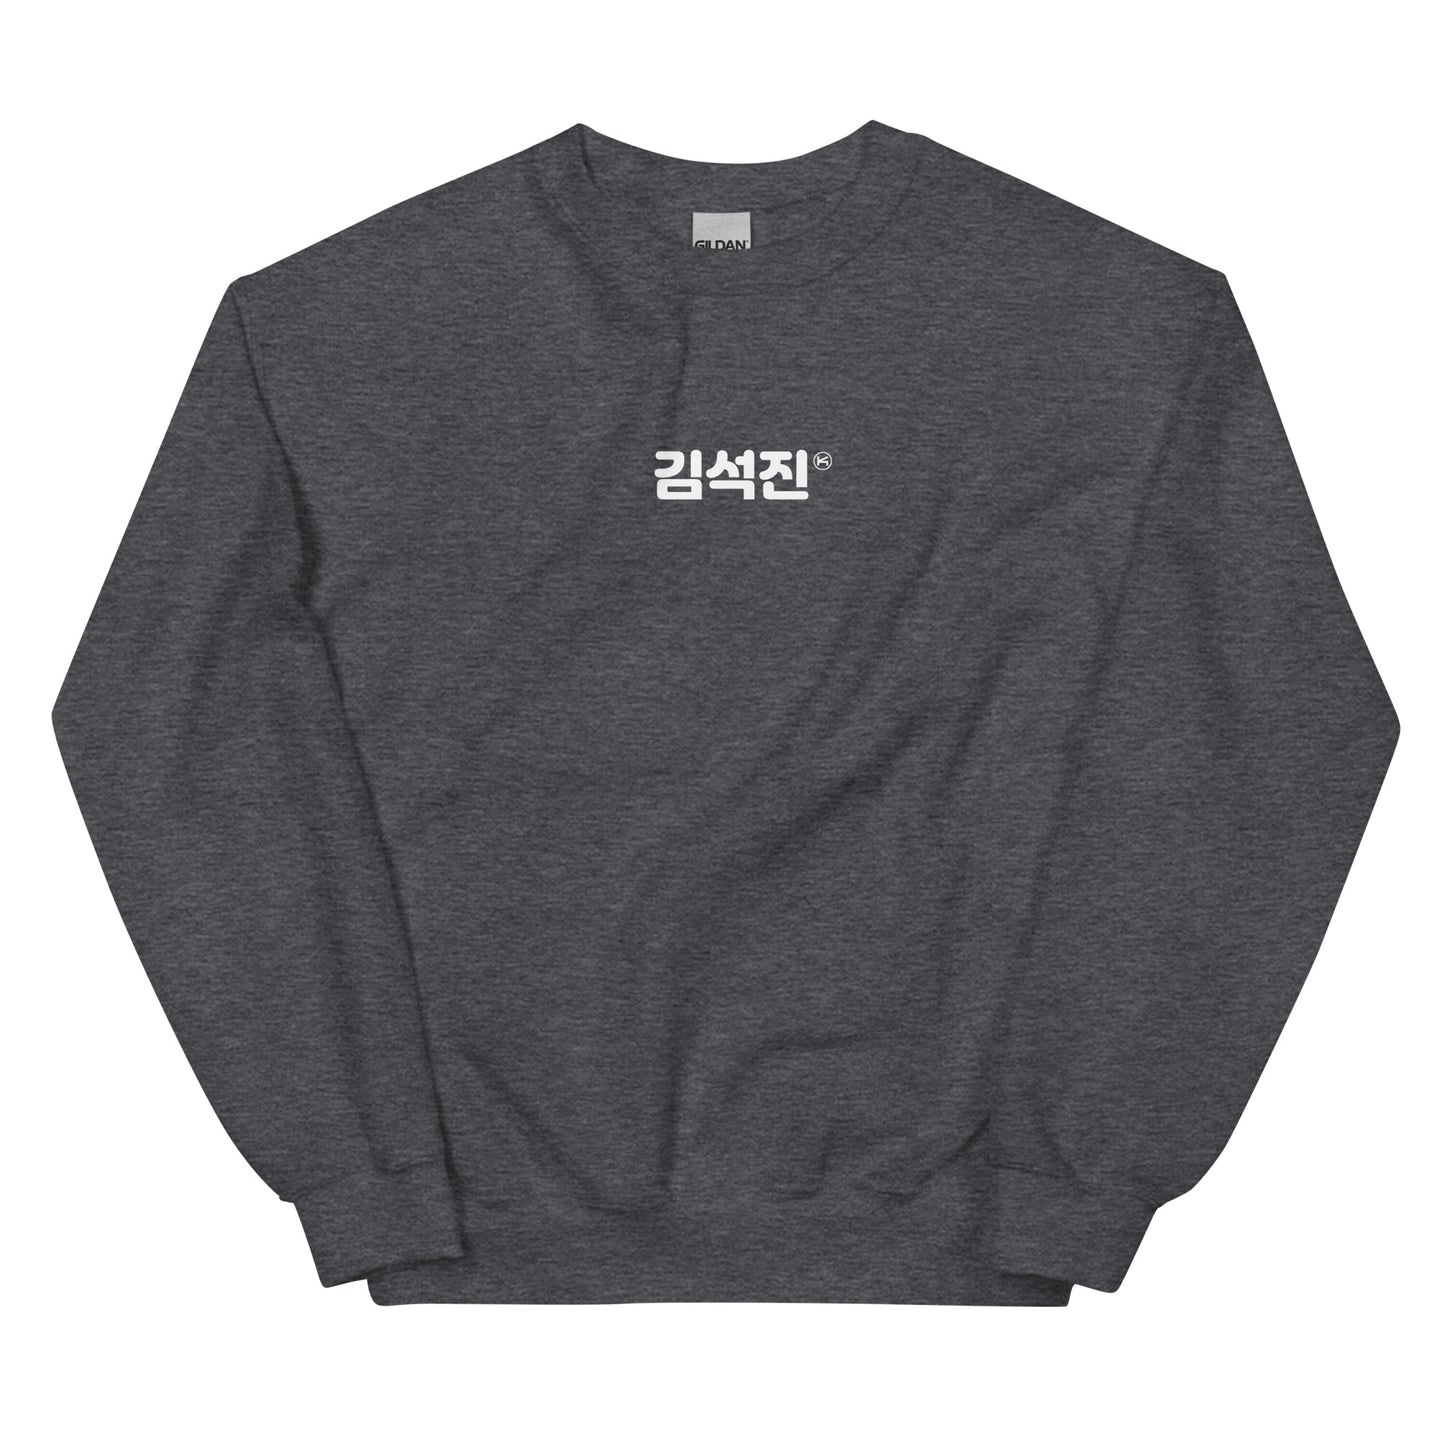 Jin, Kim Seok-jin in Korean Hangul Kpop BTS Merch Unisex Sweatshirt